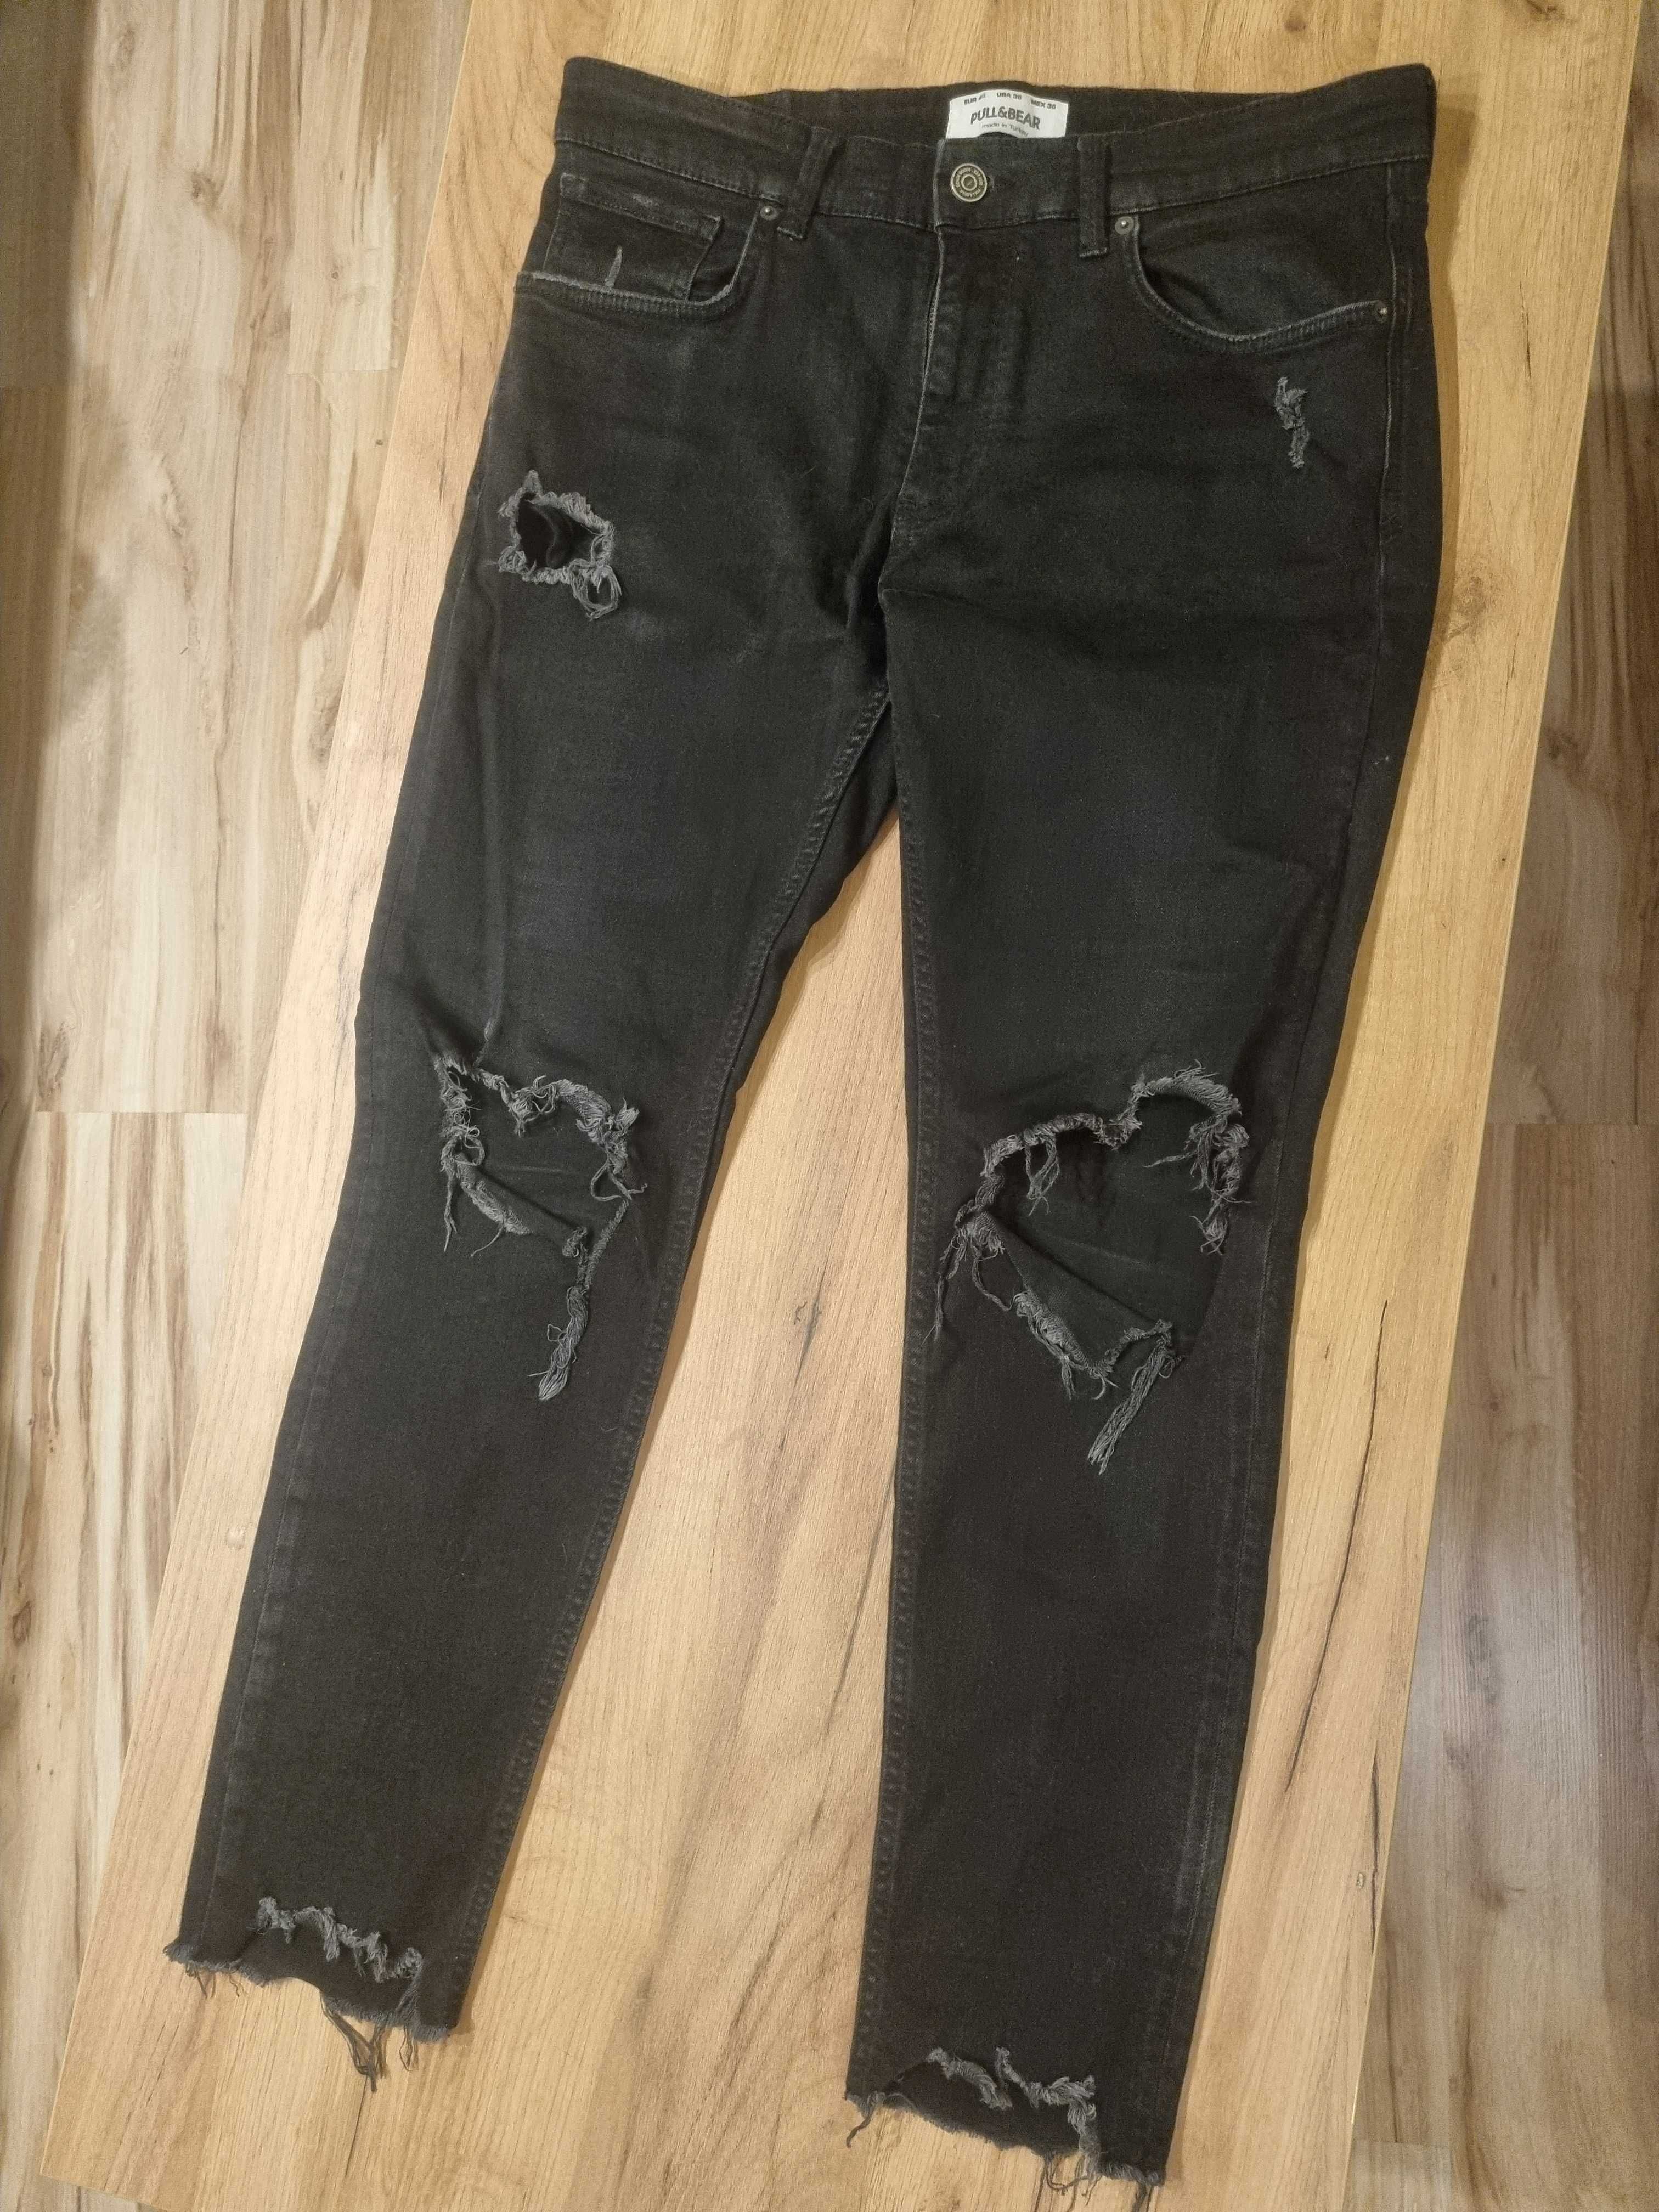 Jeansy spodnie PULL&BEAR - czarne, rozmiar 46, extra modne, NOWE